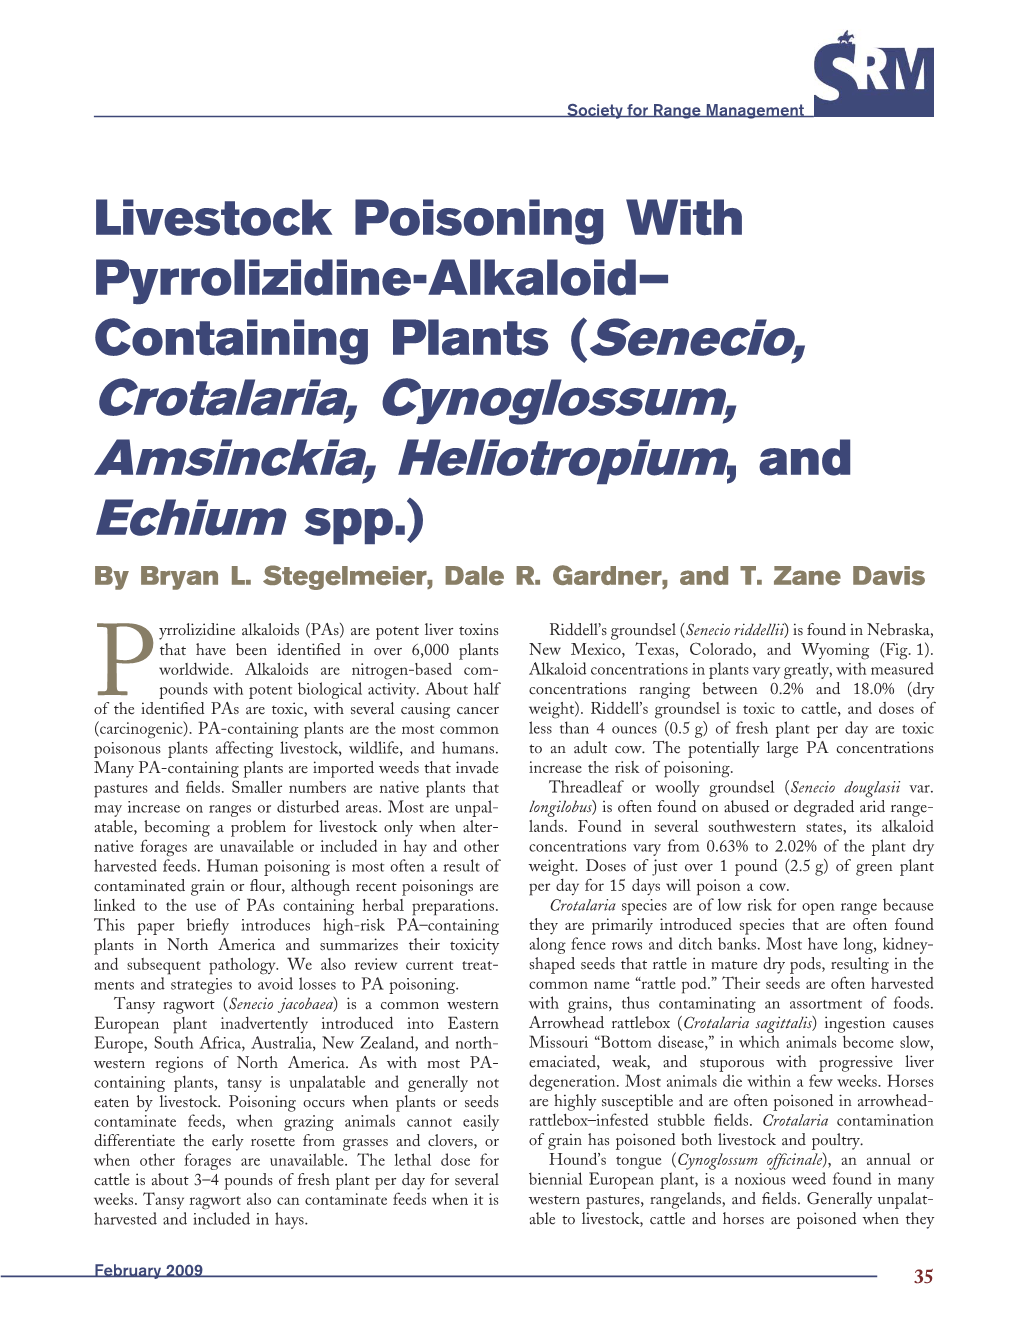 Livestock Poisoning with Pyrrolizidine-Alkaloid–Containing Plants